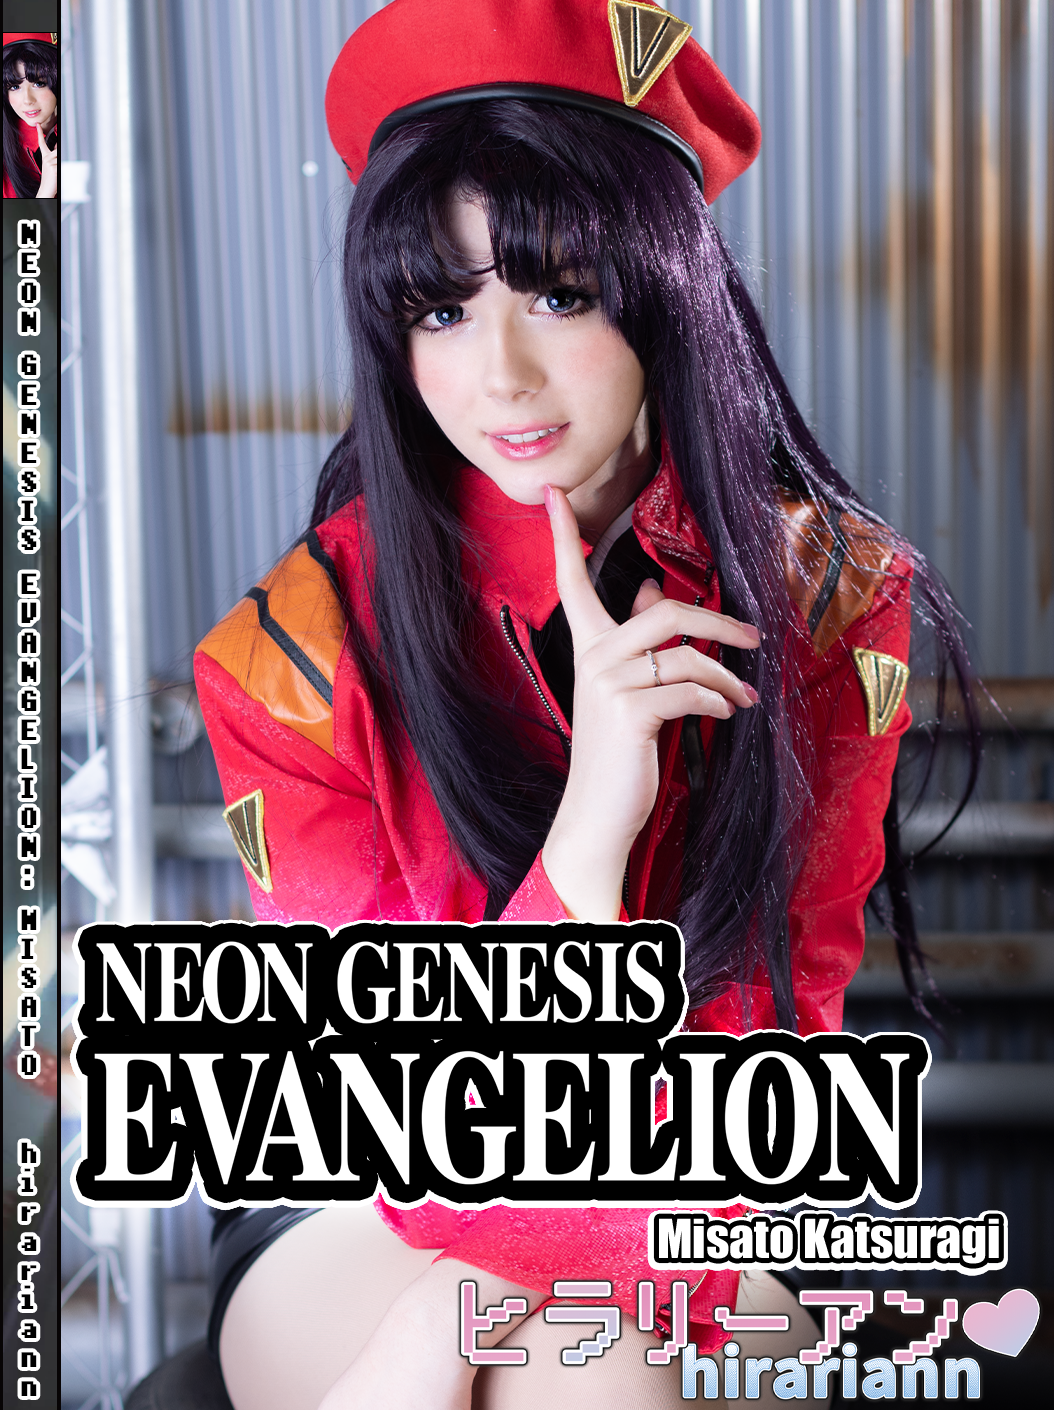 NEON GENESIS EVANGELION: Misato Katsuragi Cosplay ROM